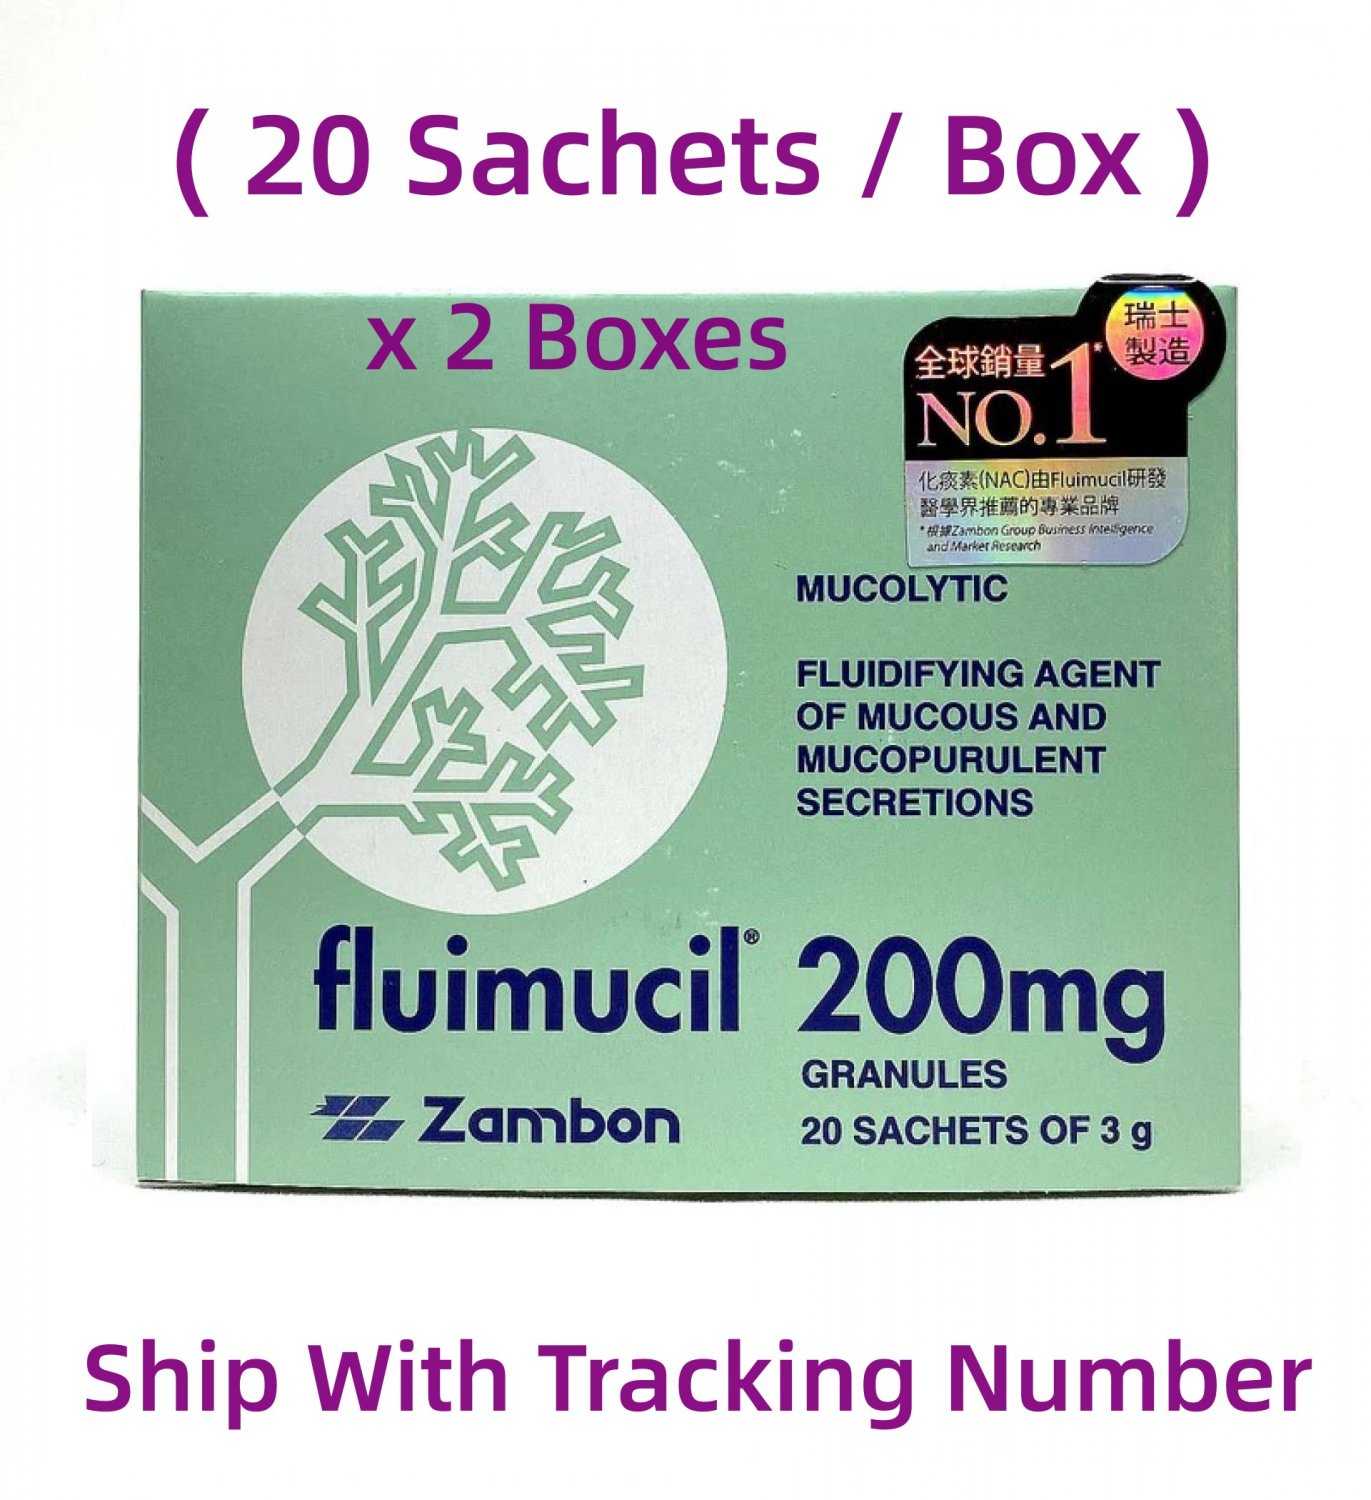 Fluimucil 200mg Granules ( 20 sachets / Box ) x 2 Boxes